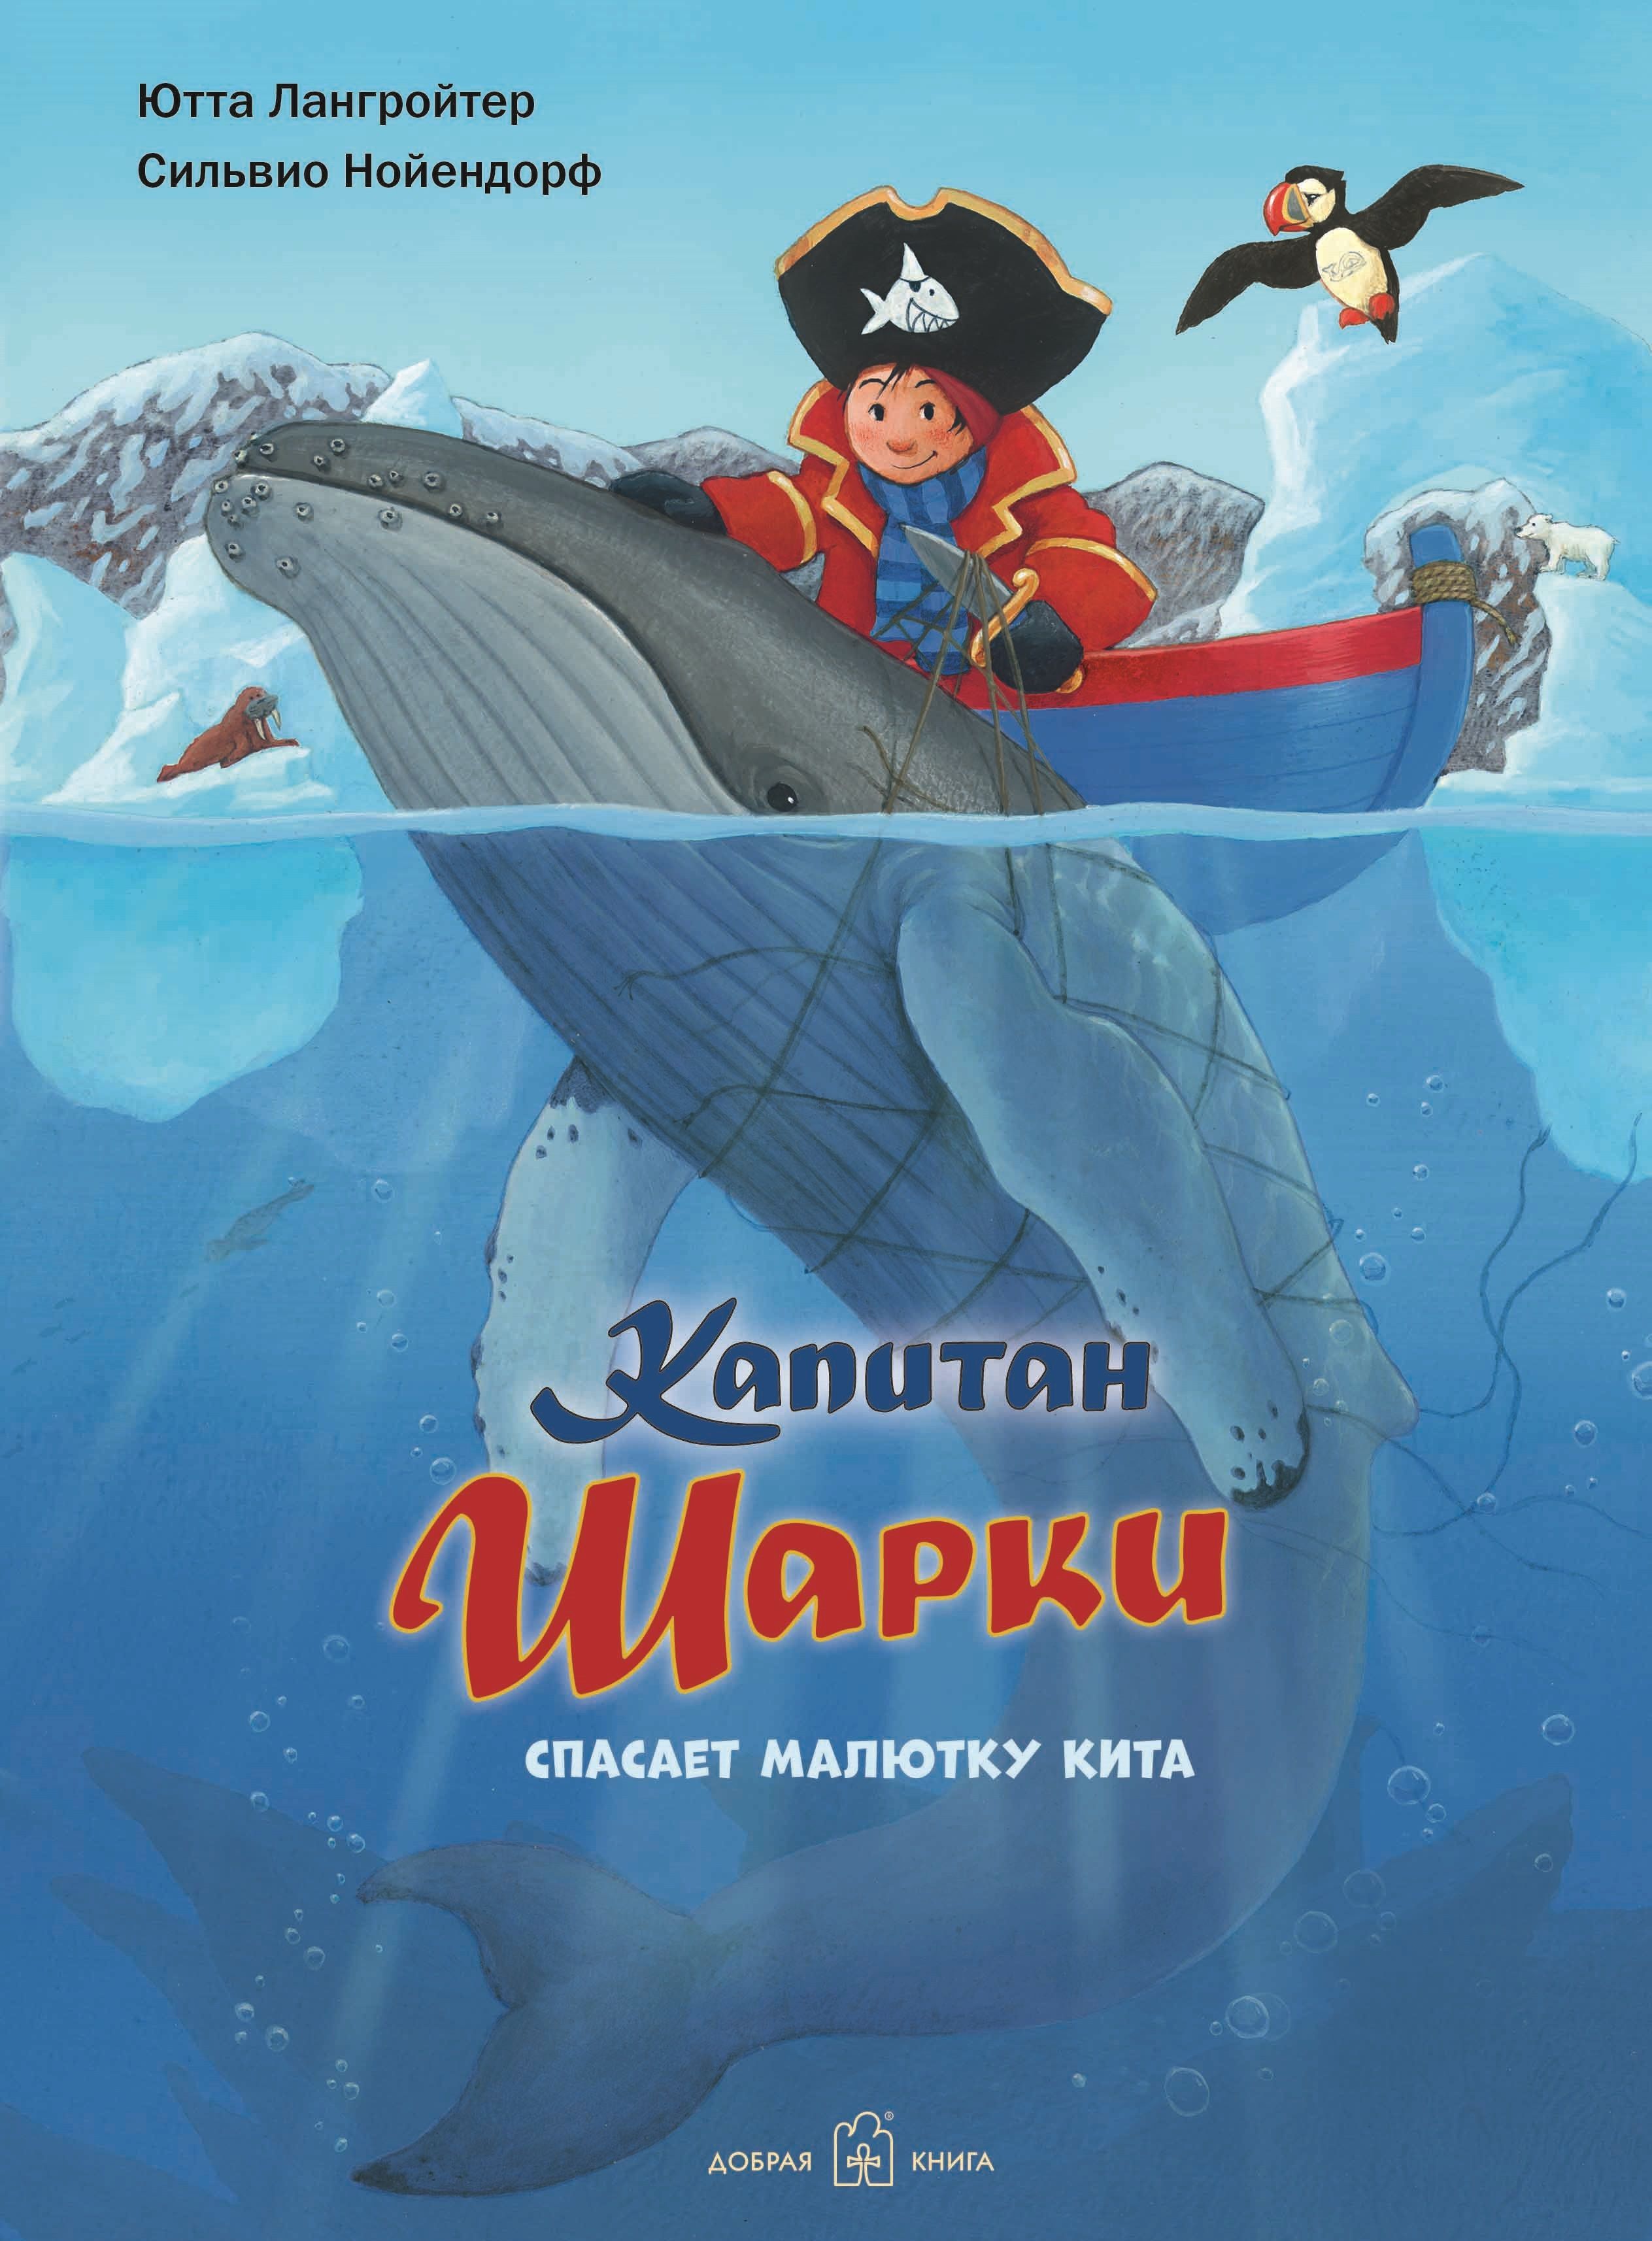 Книга 7 приключения. Капитан Шарки спасает малютку кита. Ютта Лангройтер Капитан Шарки. Лангройтер Ютта Капитан Шарки спасает. Книга о китах.